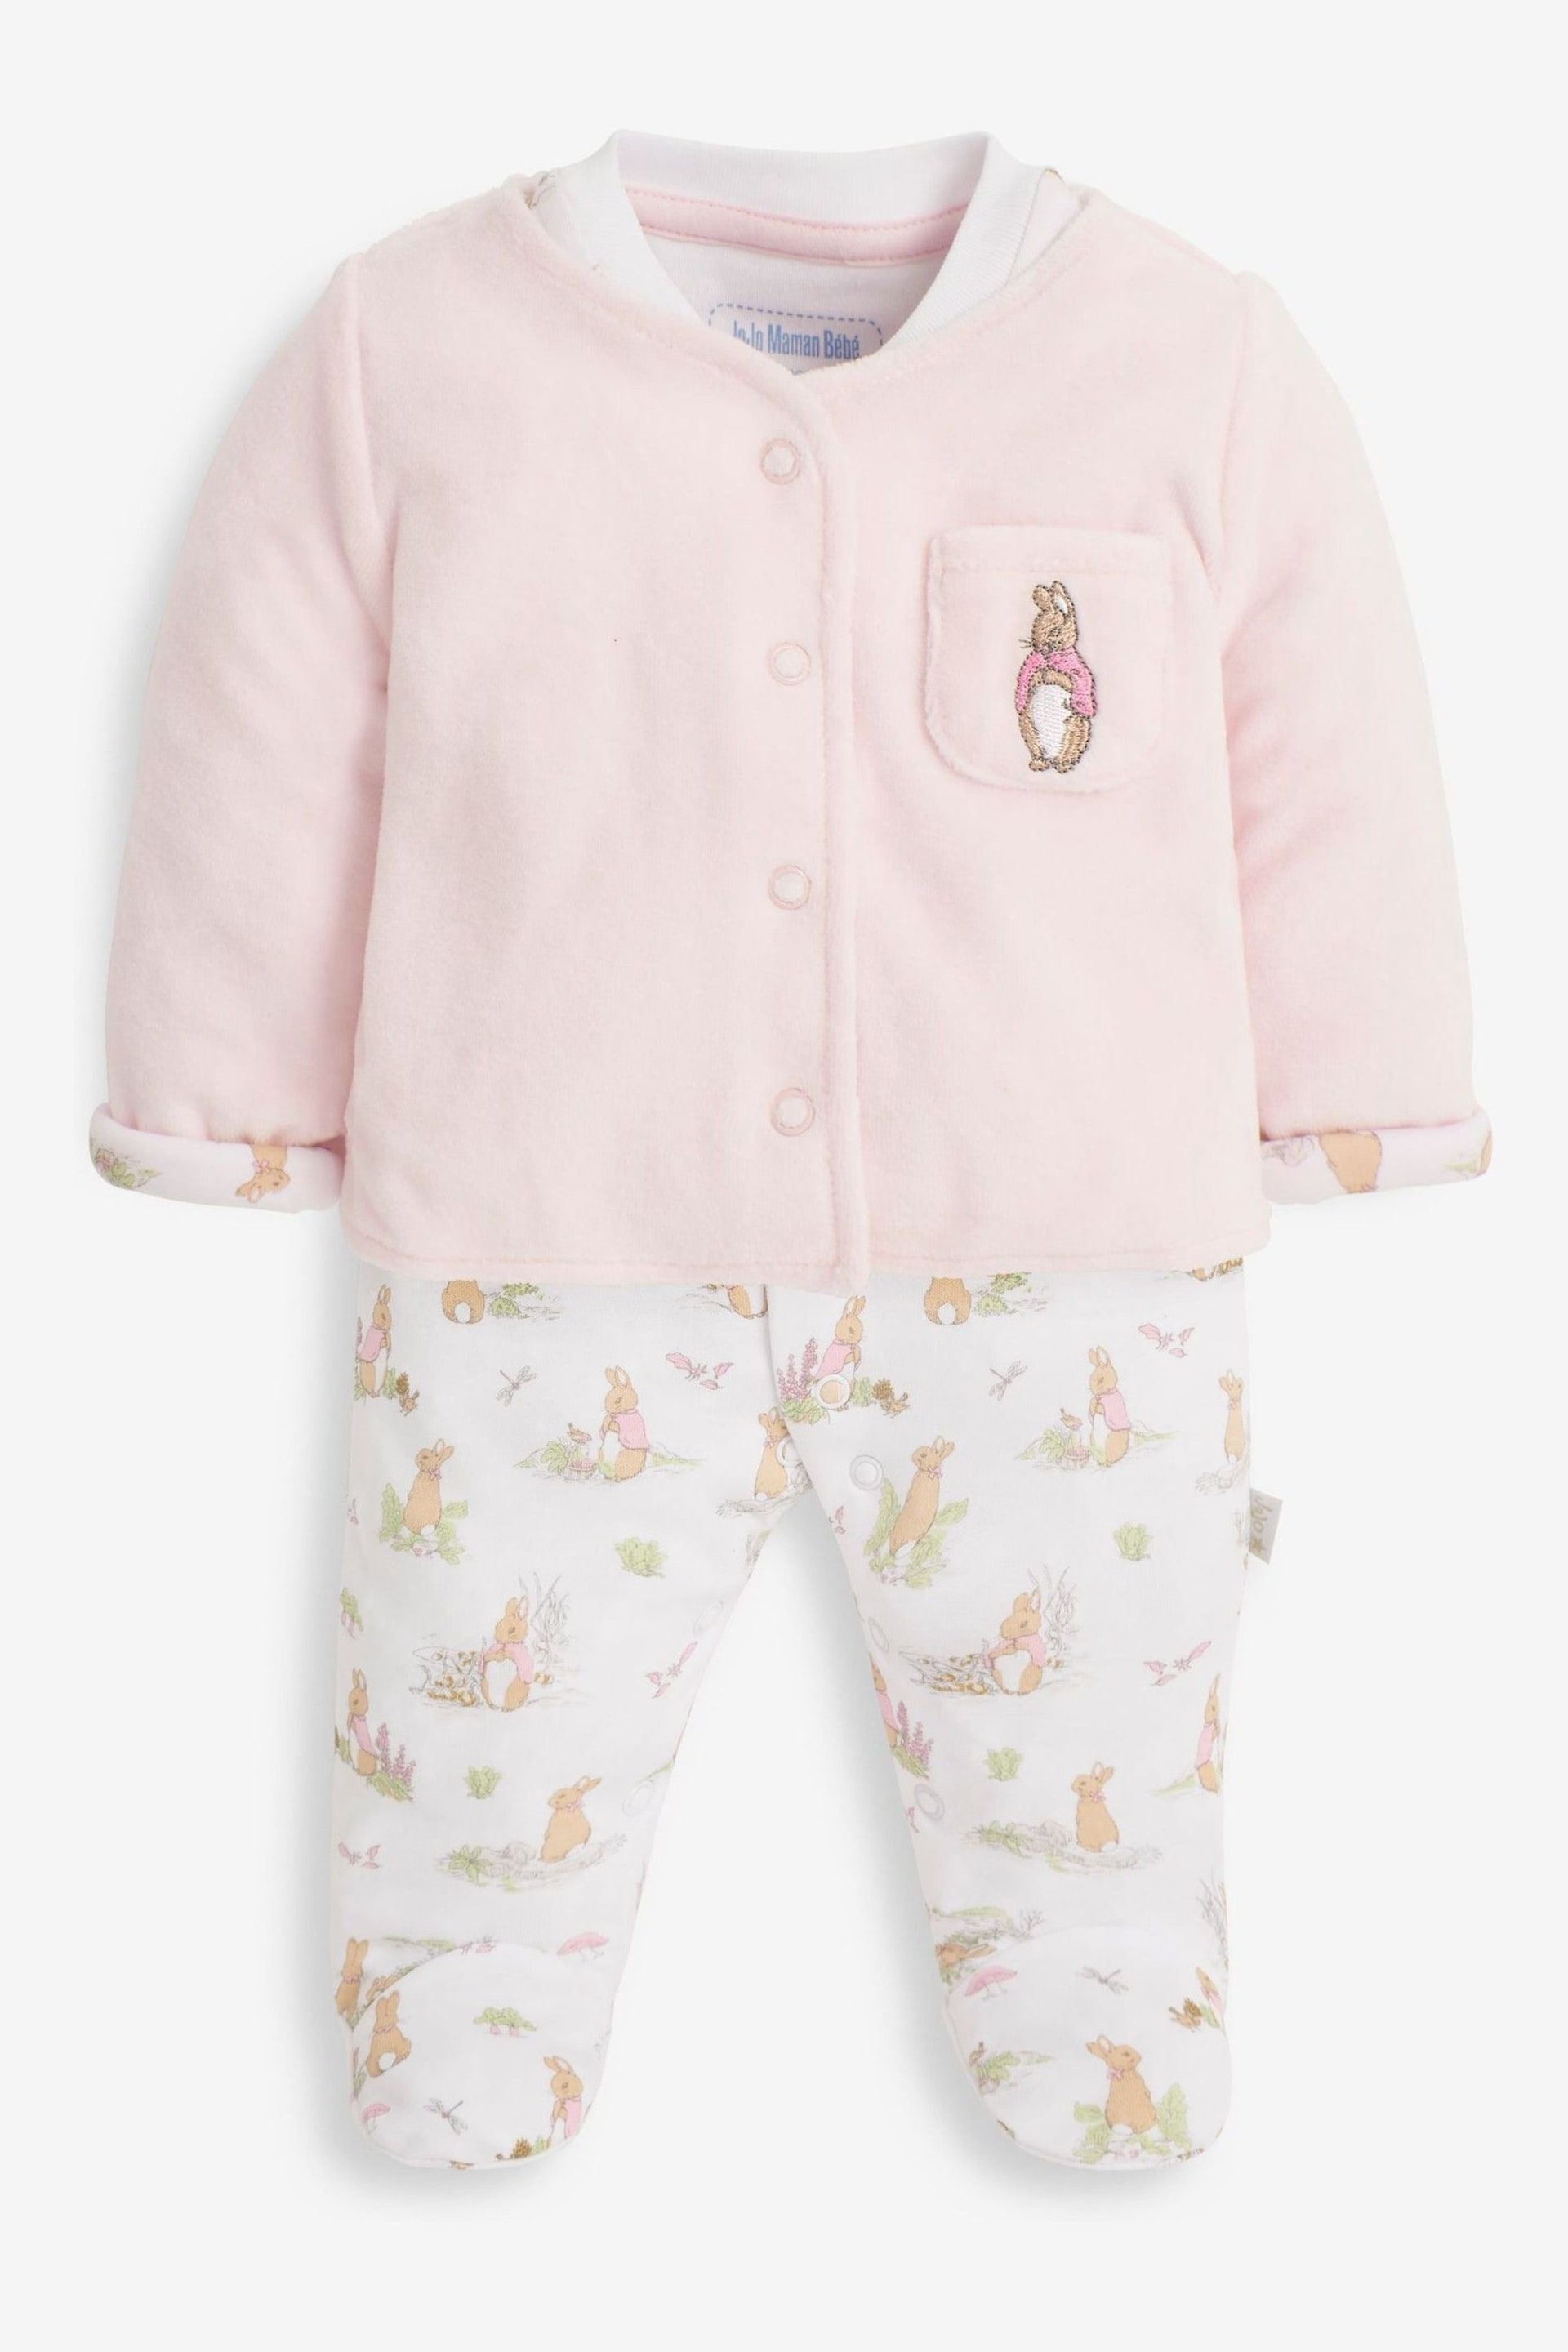 JoJo Maman Bébé Pink 3-Piece Flopsy Bunny Sleepsuit, Jacket & Hat Set - Image 4 of 9